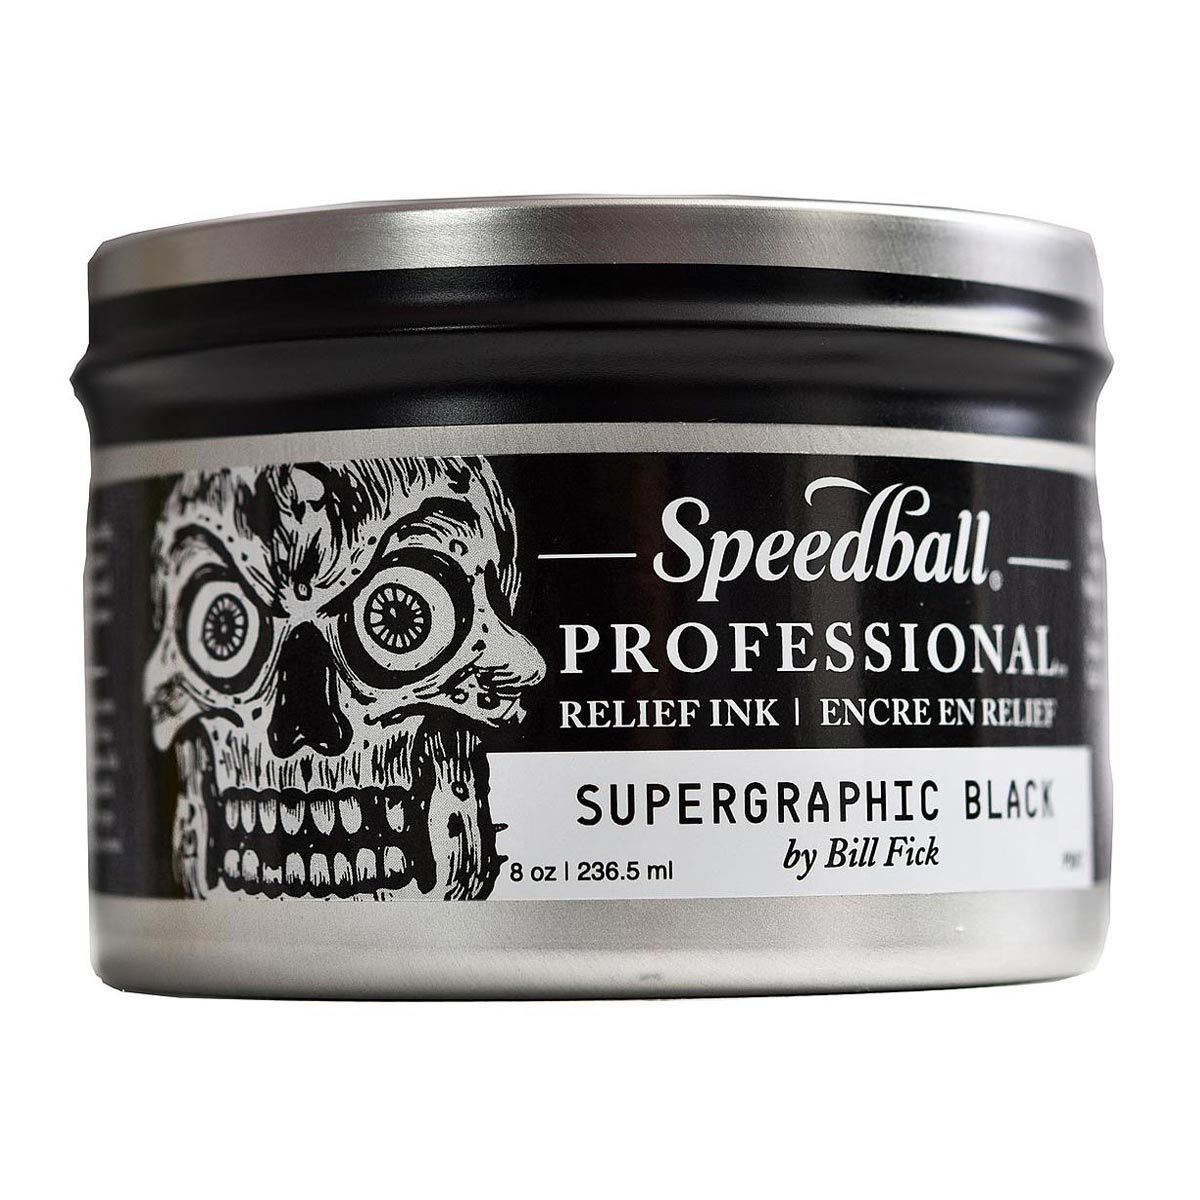 Speedball Professional Relief Ink - Supergraphic Black 8 oz